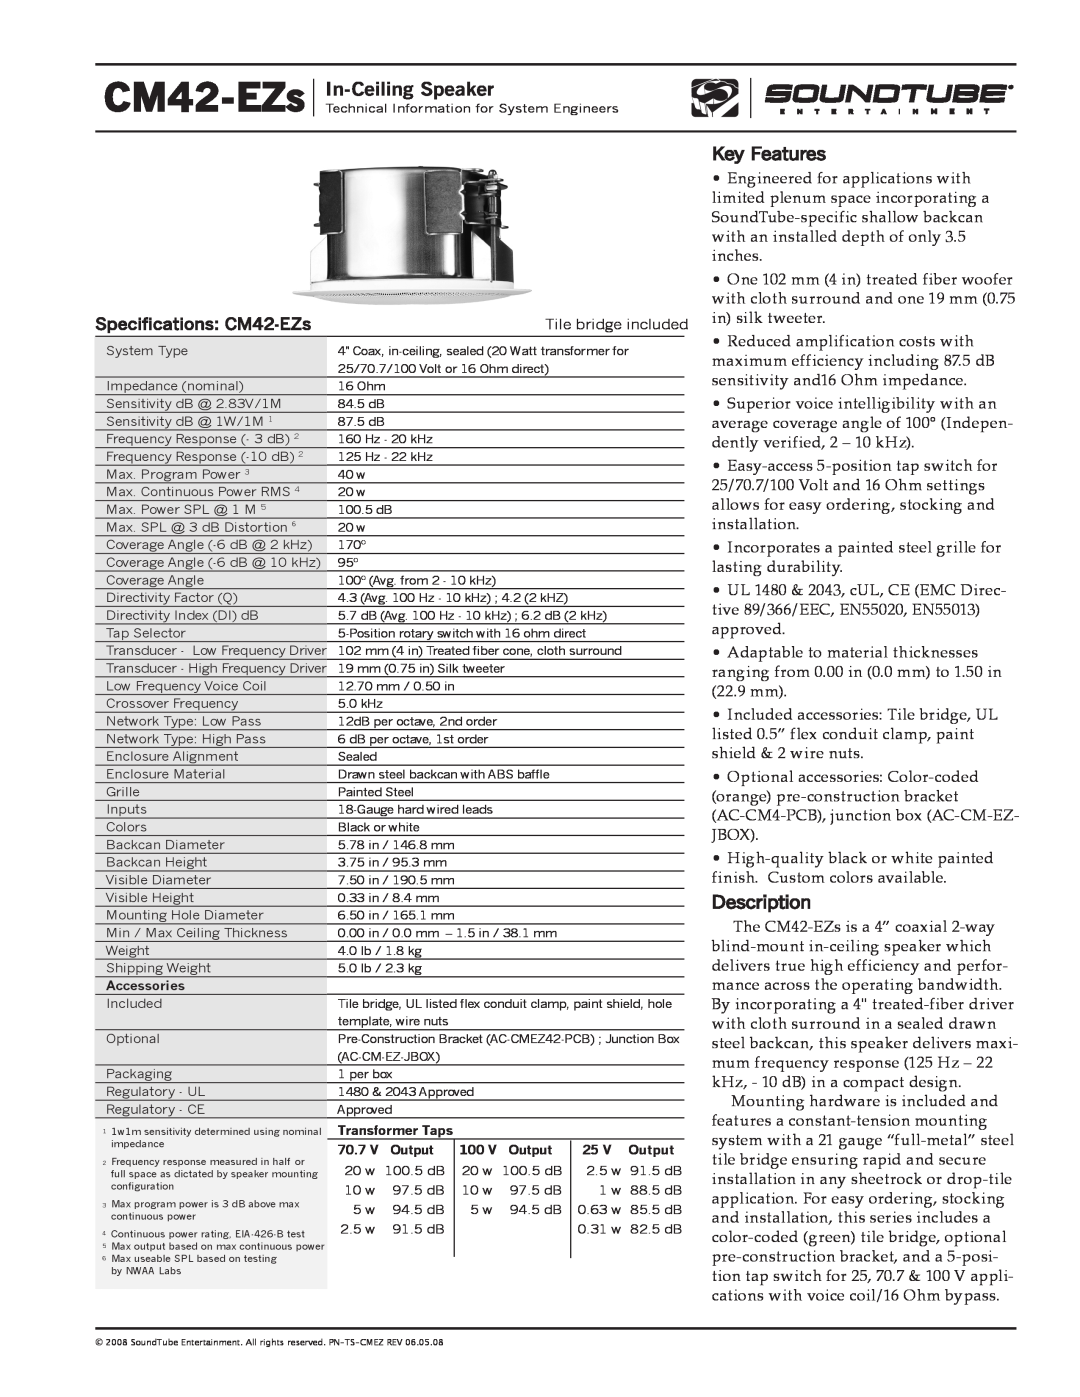 Phase Technology CM42-EZs specifications In-CeilingSpeaker, Key Features, Description 